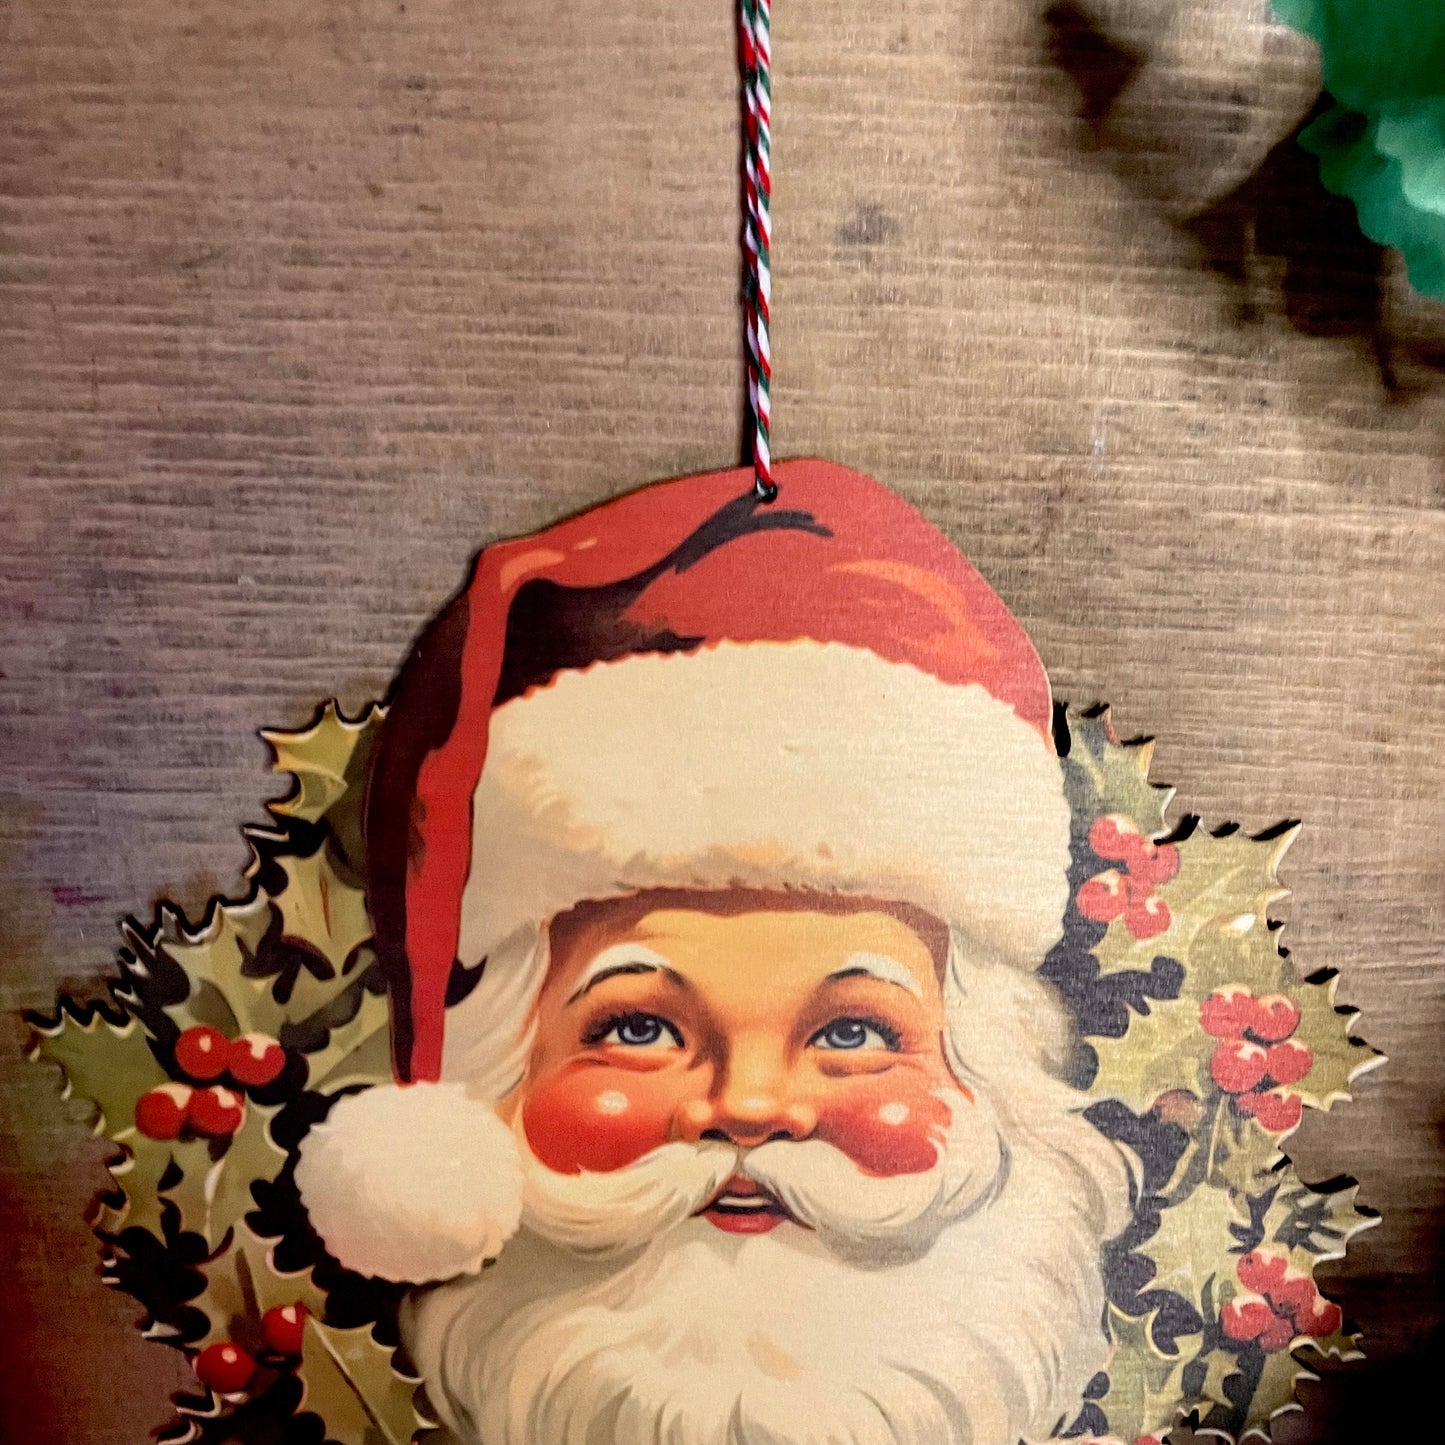 Vintage Santa Christmas Hanging Decoration, wall hanging kitsch festive decor wooden laser cut